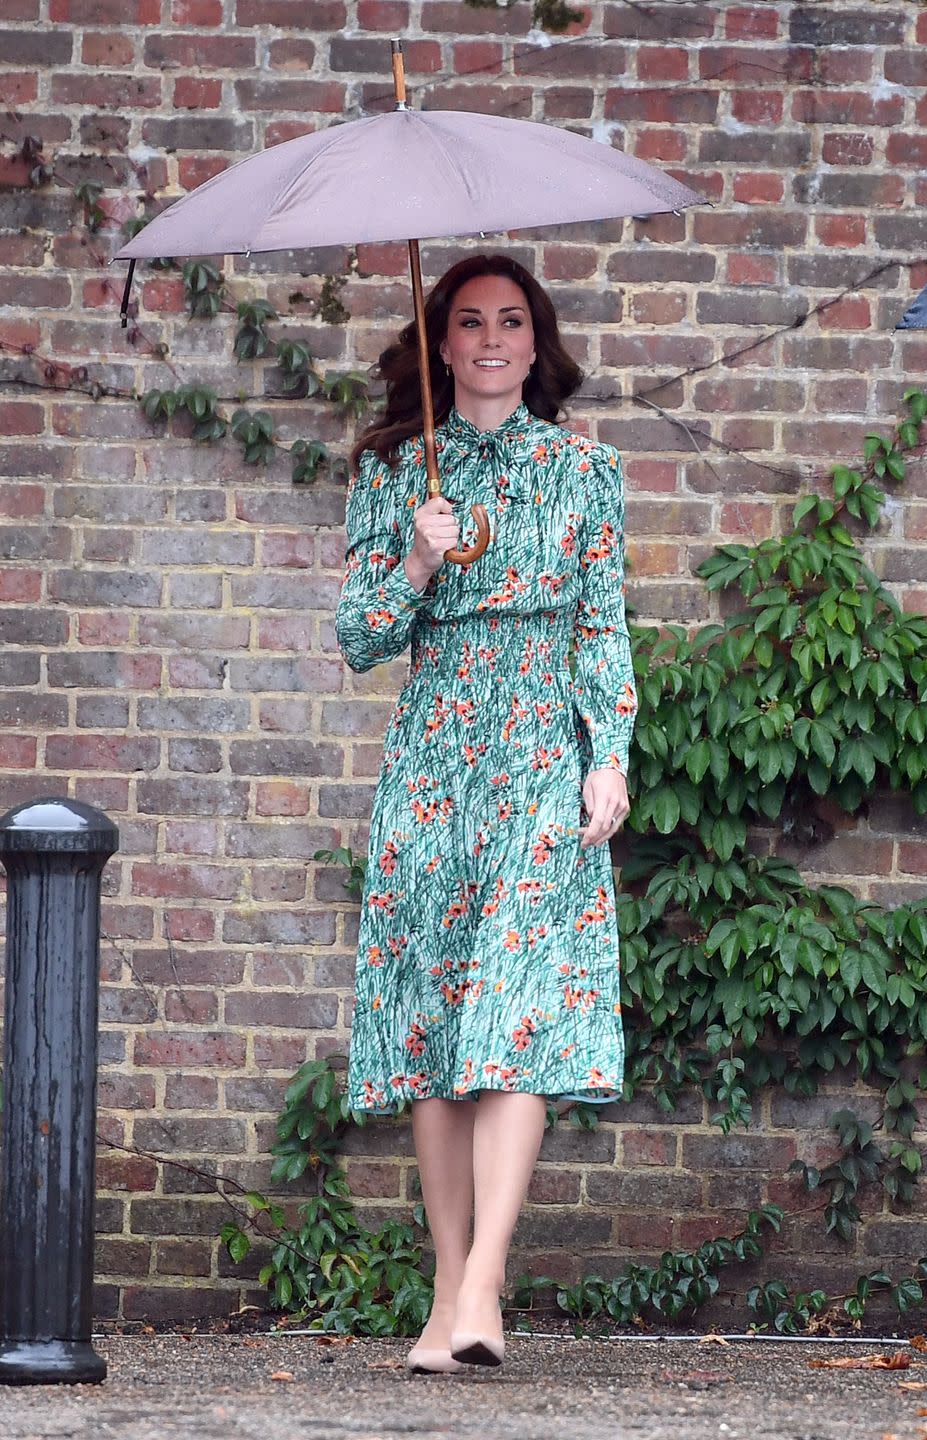 Kate’s Floral Dress at Kensington Palace’s White Garden